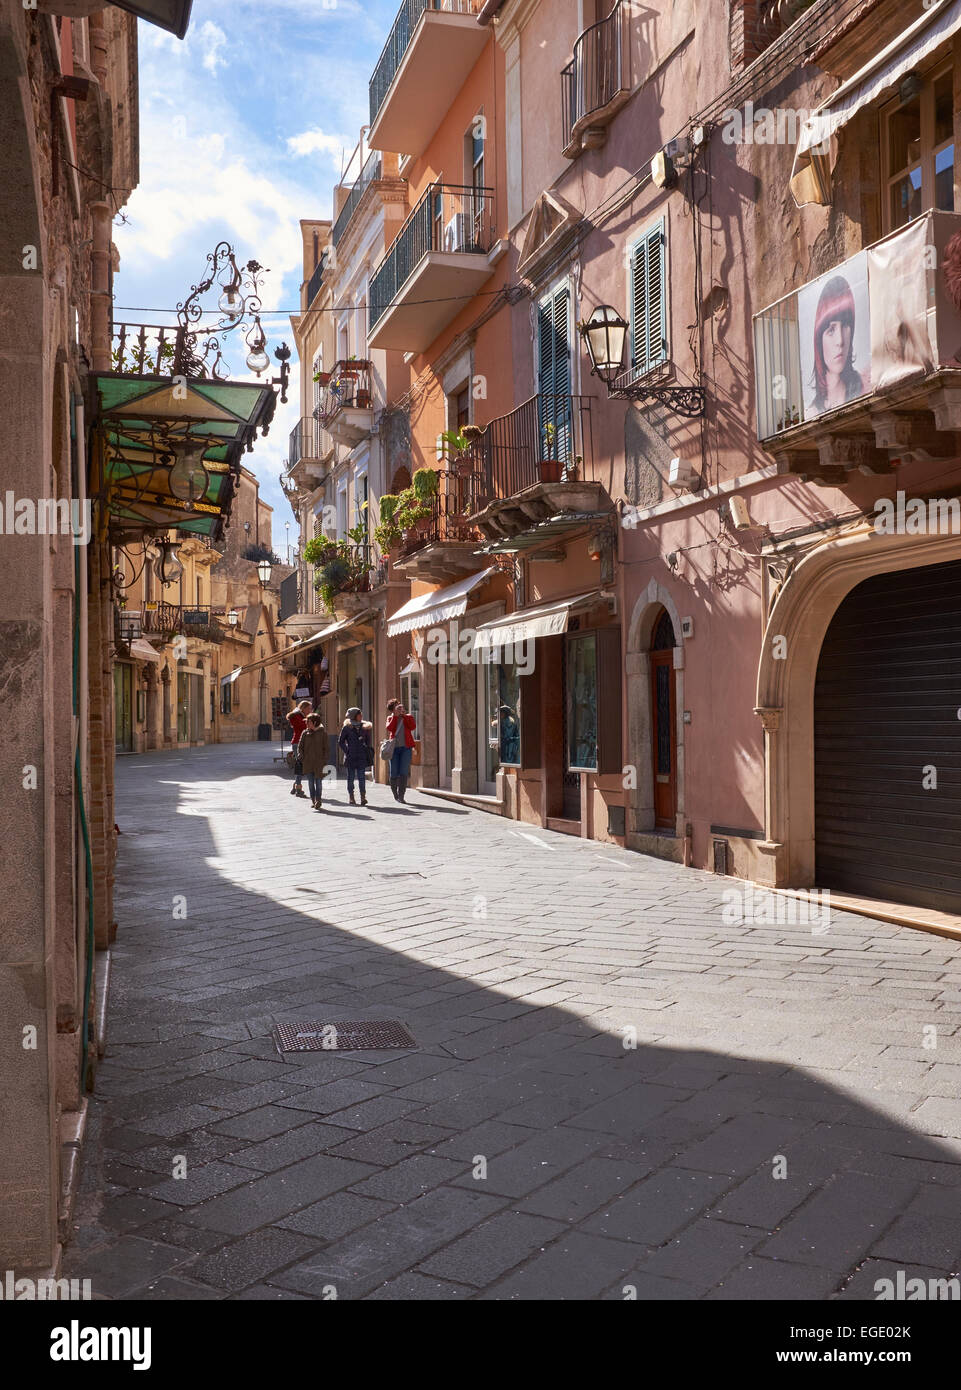 Straßenszene in Taormina, Sizilien, Italien. Italienischen Tourismus, Reise- und Urlaubsziel. Stockfoto